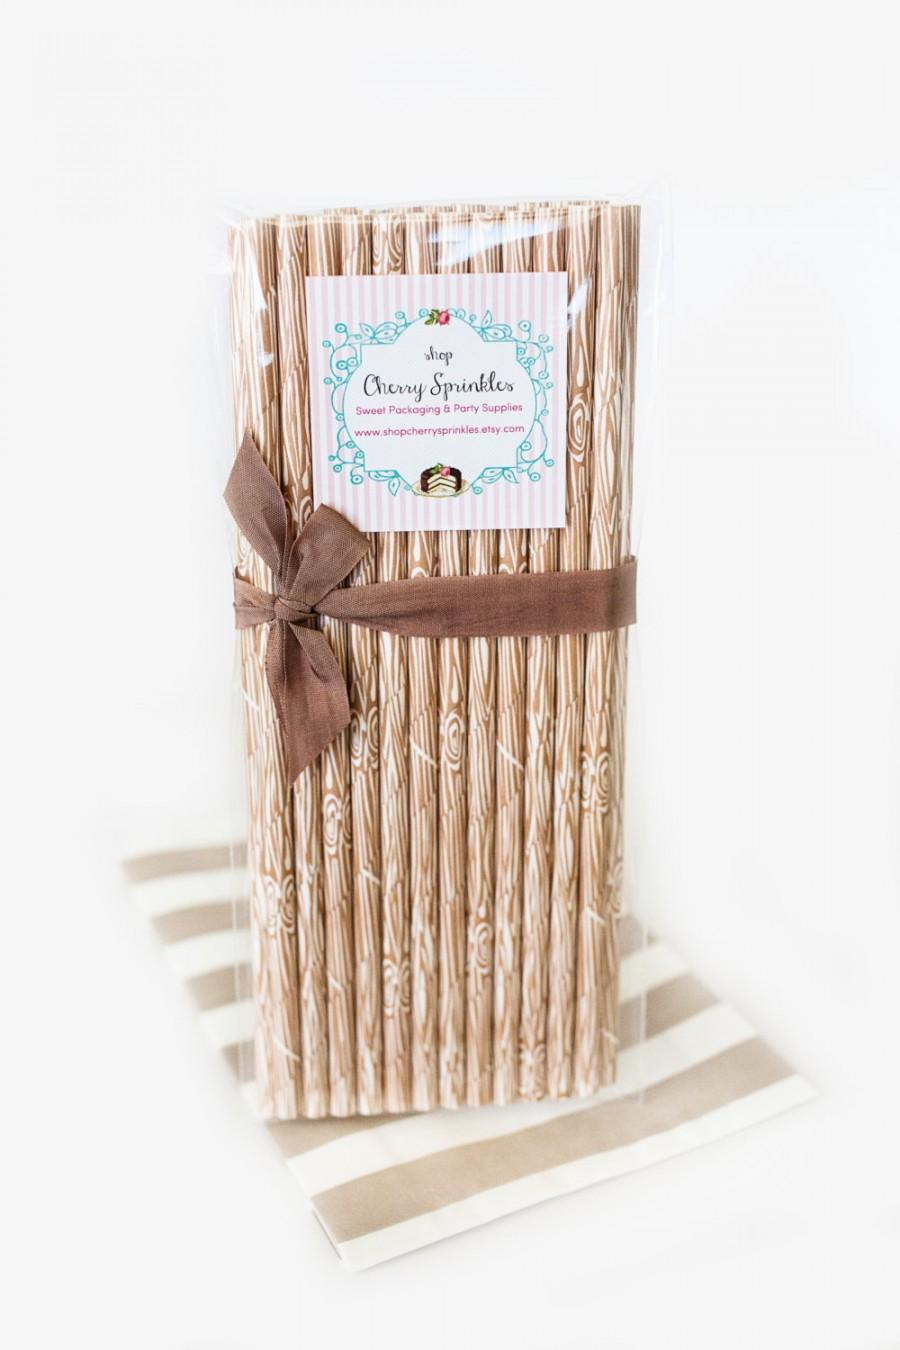 Wedding - Lumberjack party - Wood Grain paper straws - Woodland party - Rustic Wedding Decor - Cake Pops - Party Decor - Woodland Decor - Brown Straws